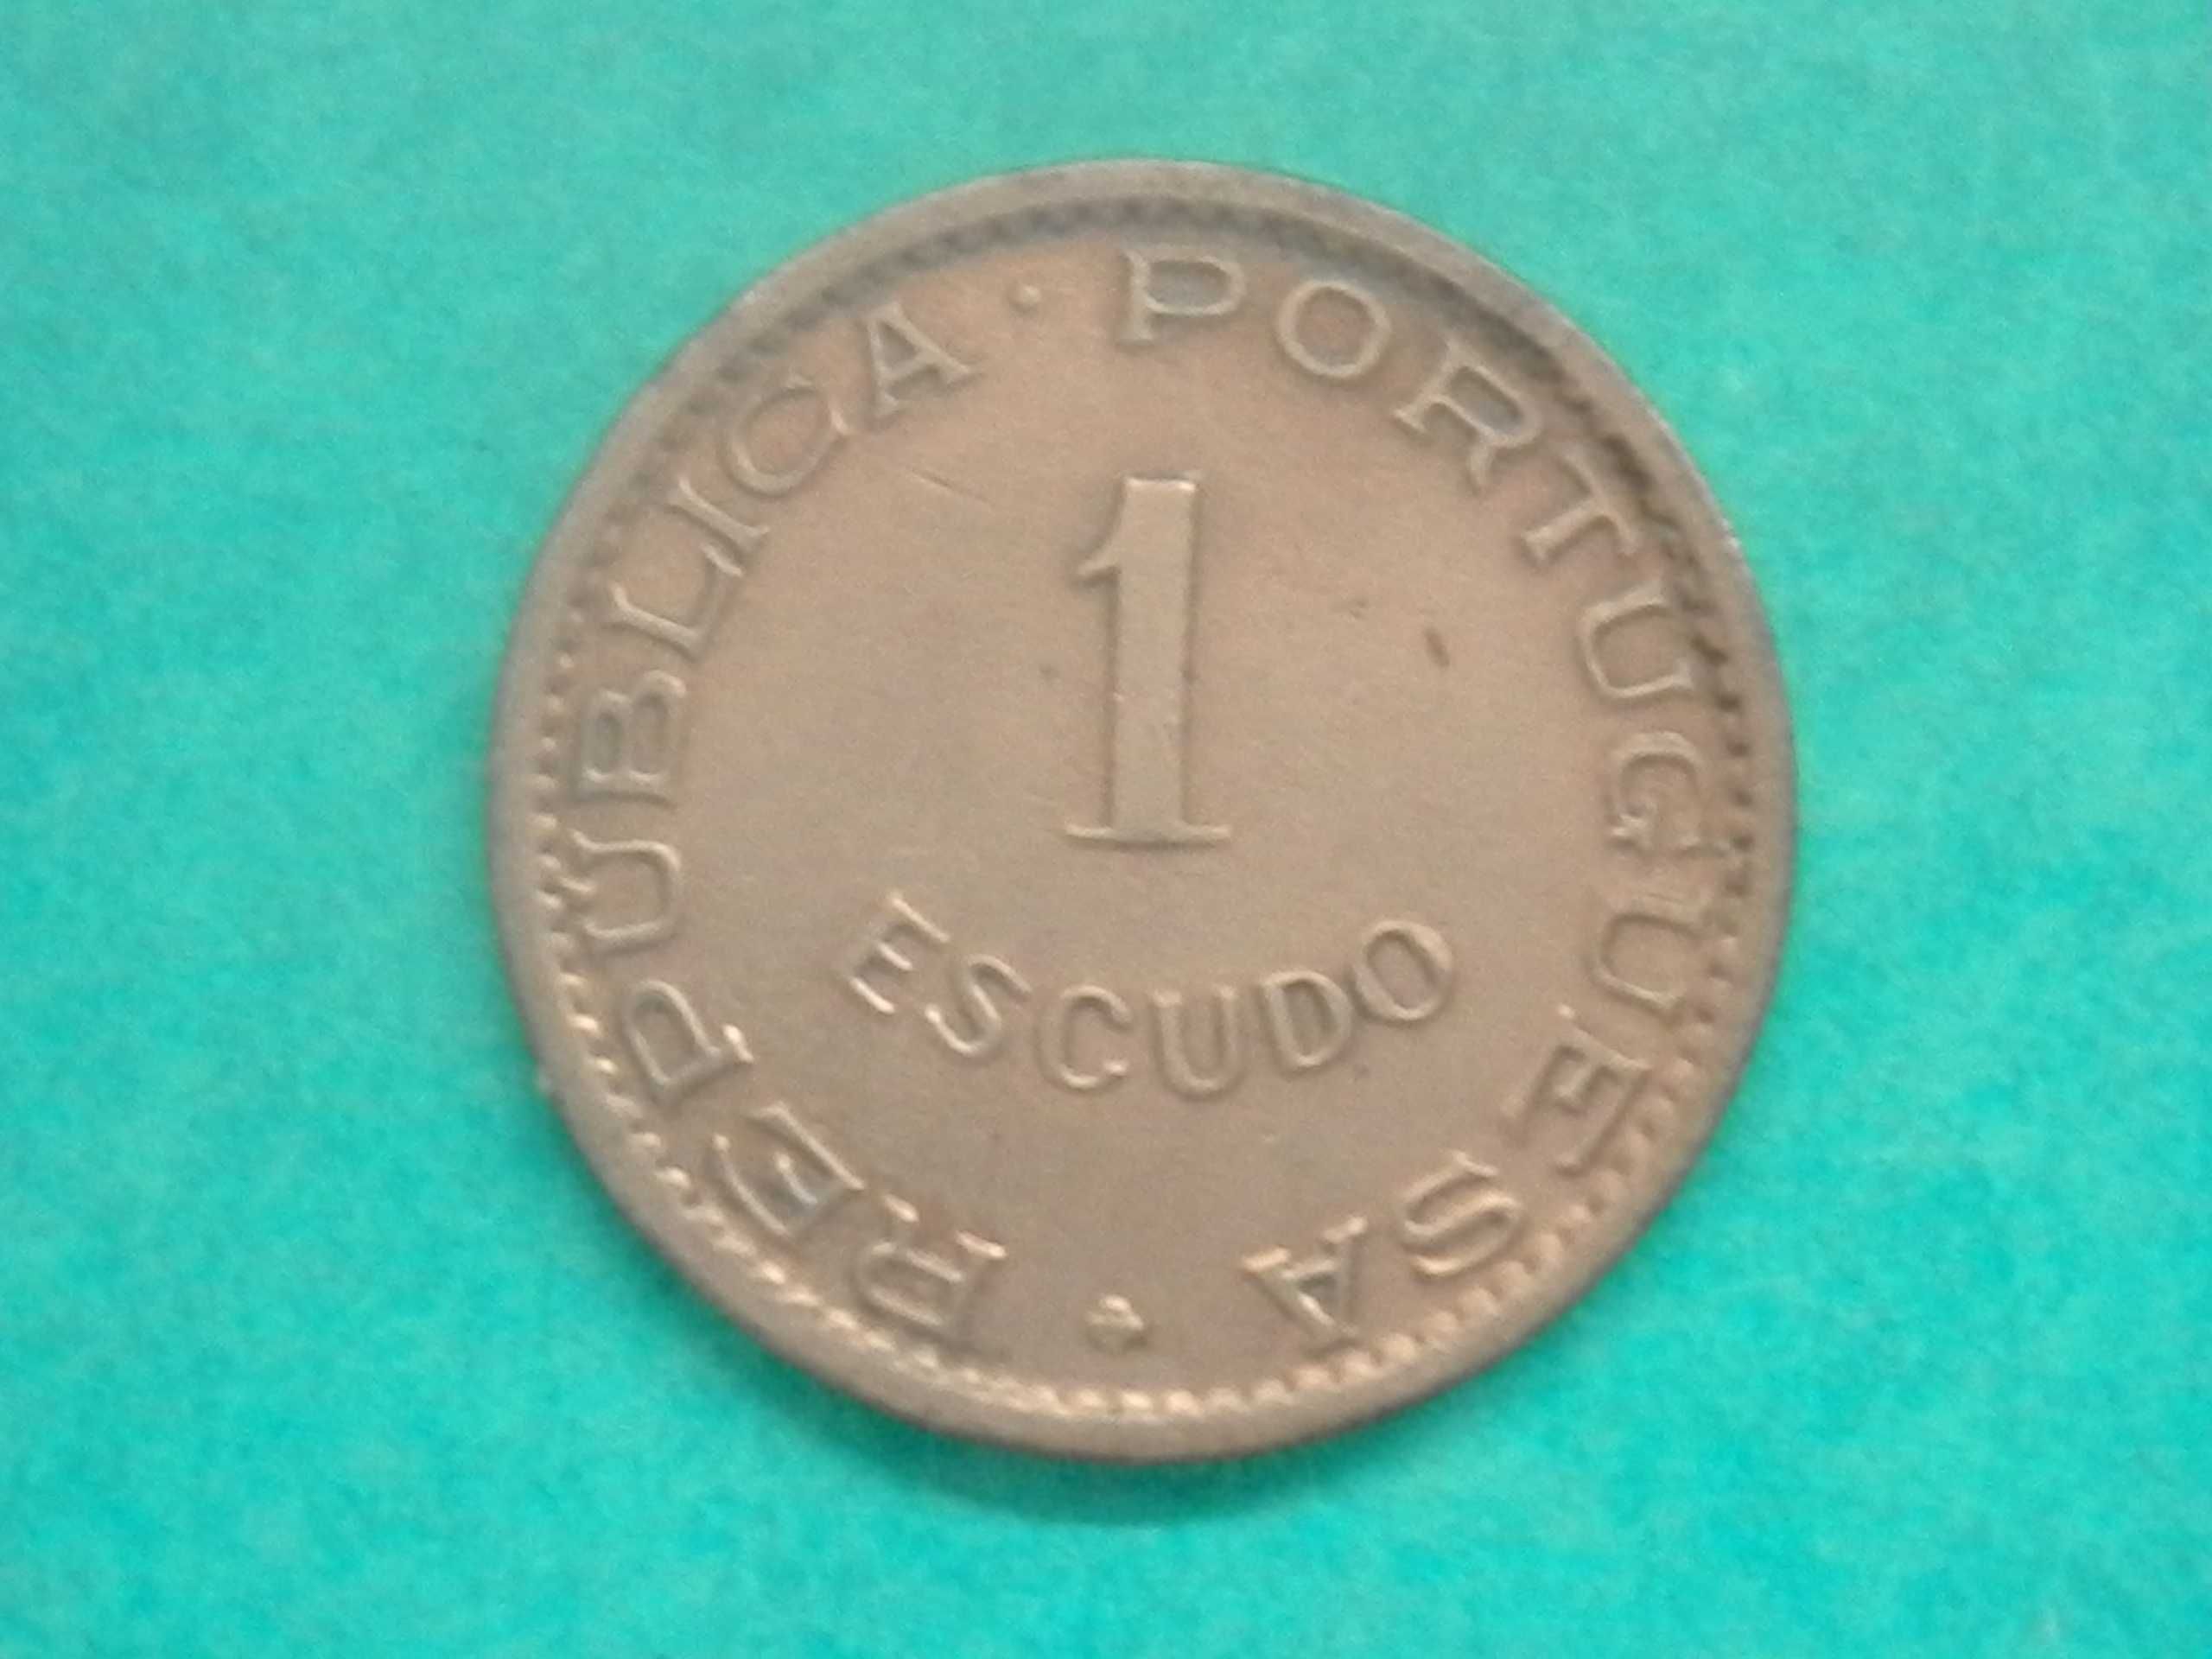 618 - Angola: 1 escudo 1956 bronze, por 5,00